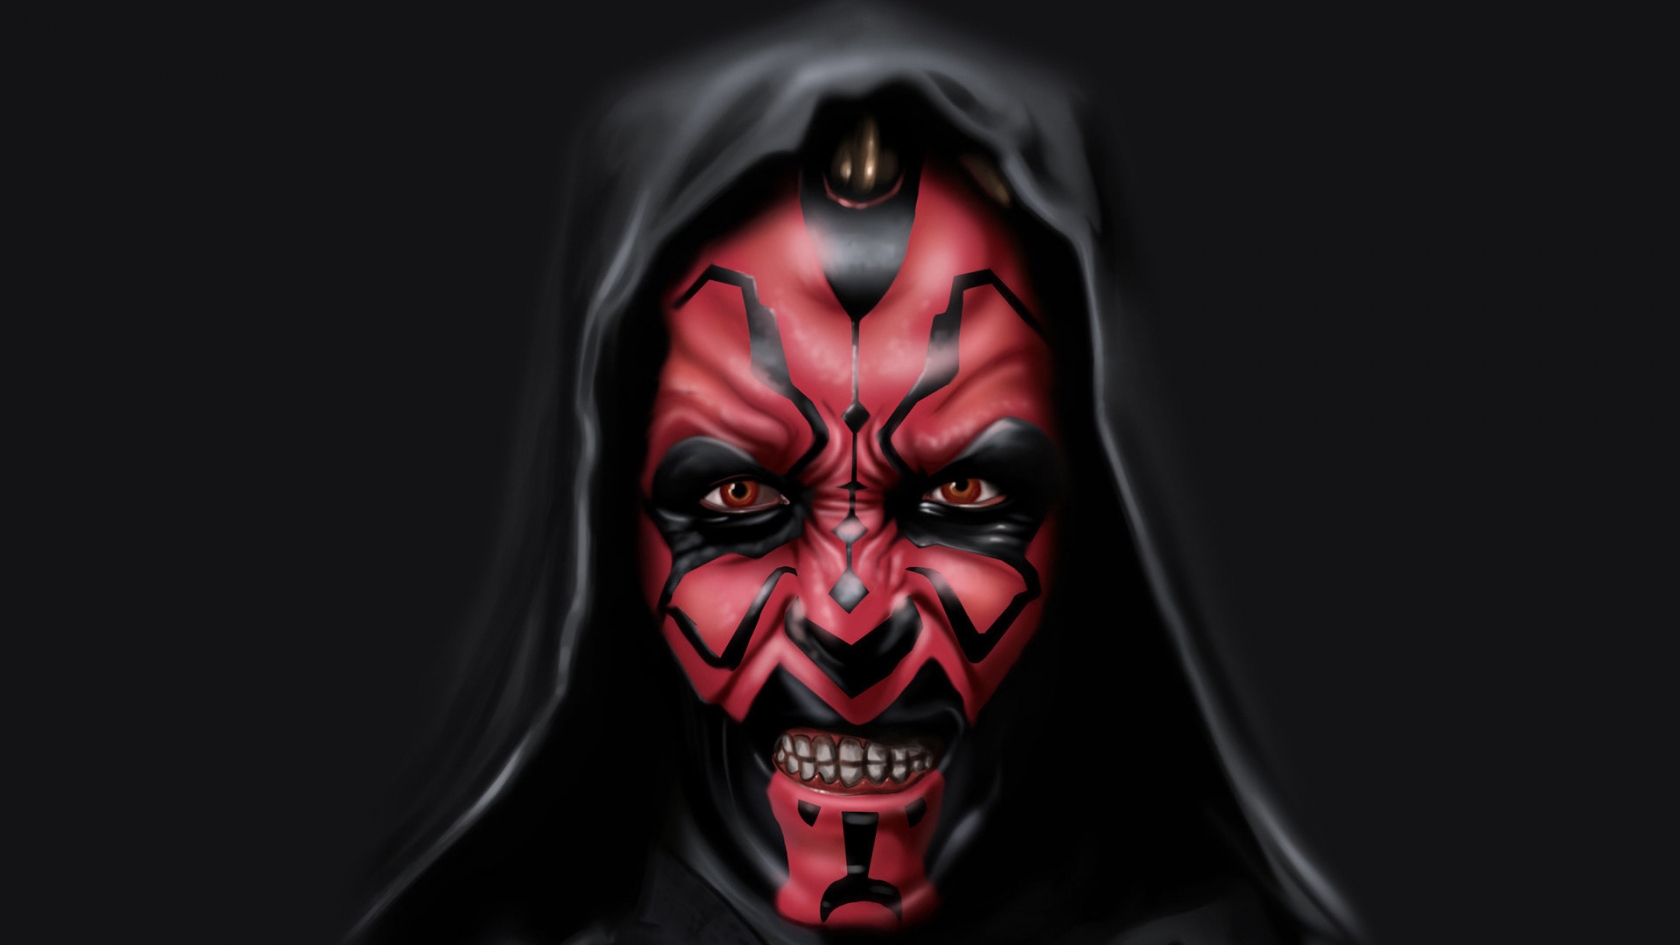 Darth Vader Animated for 1680 x 945 HDTV resolution